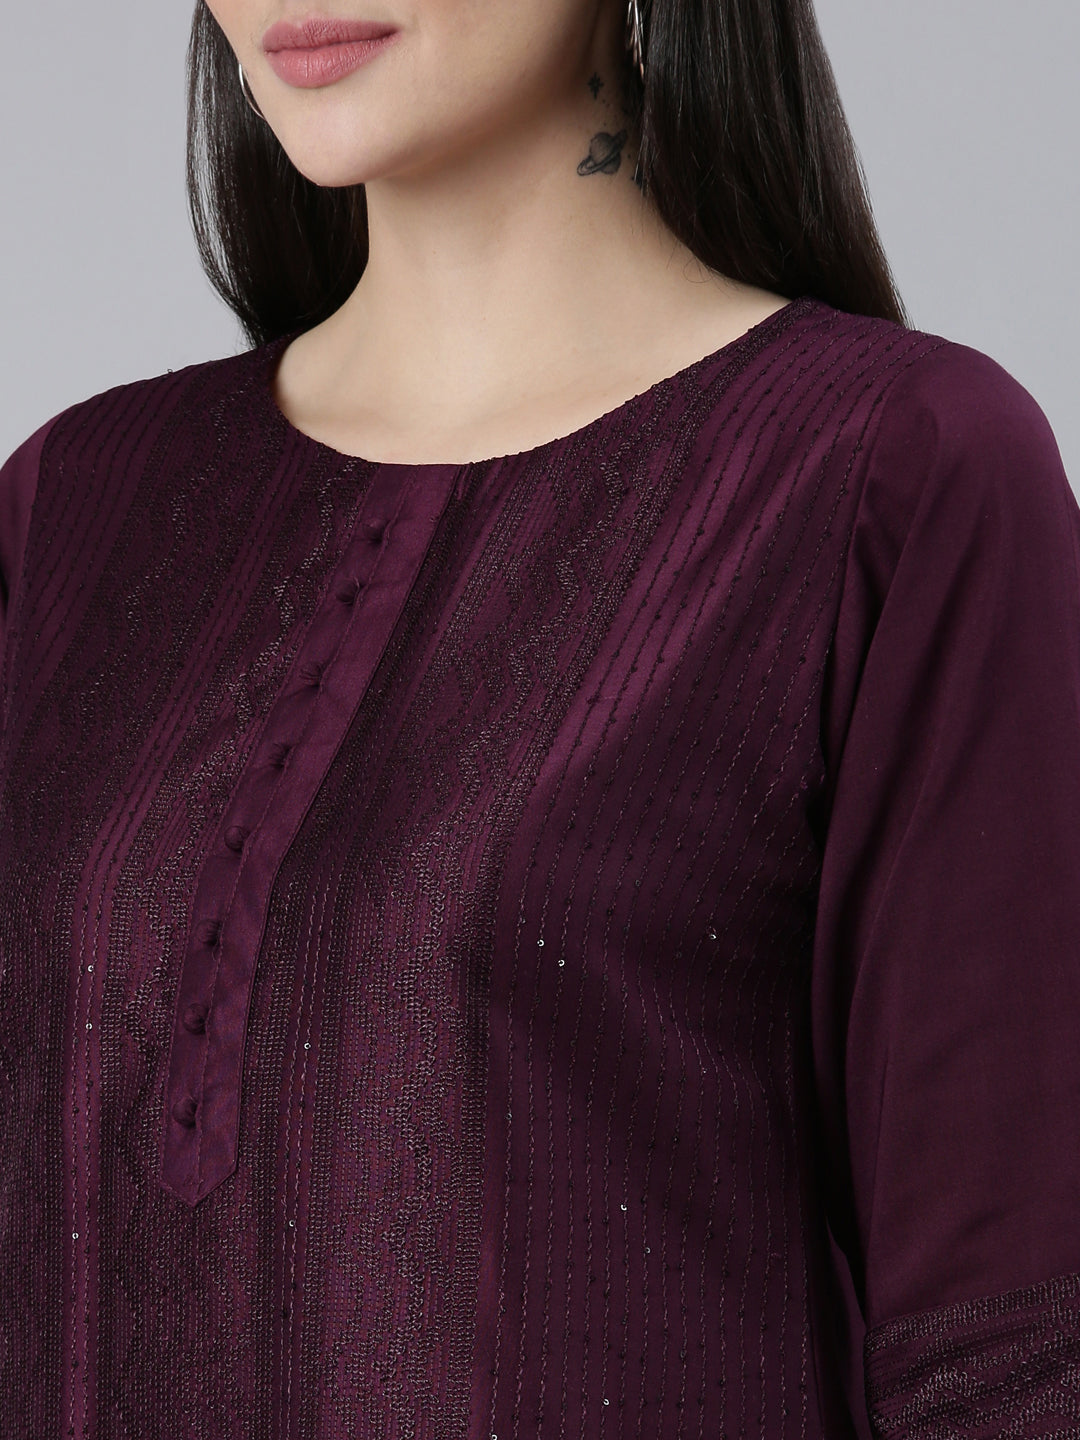 Neeru's Purple Regular Straight Woven Design Kurtas